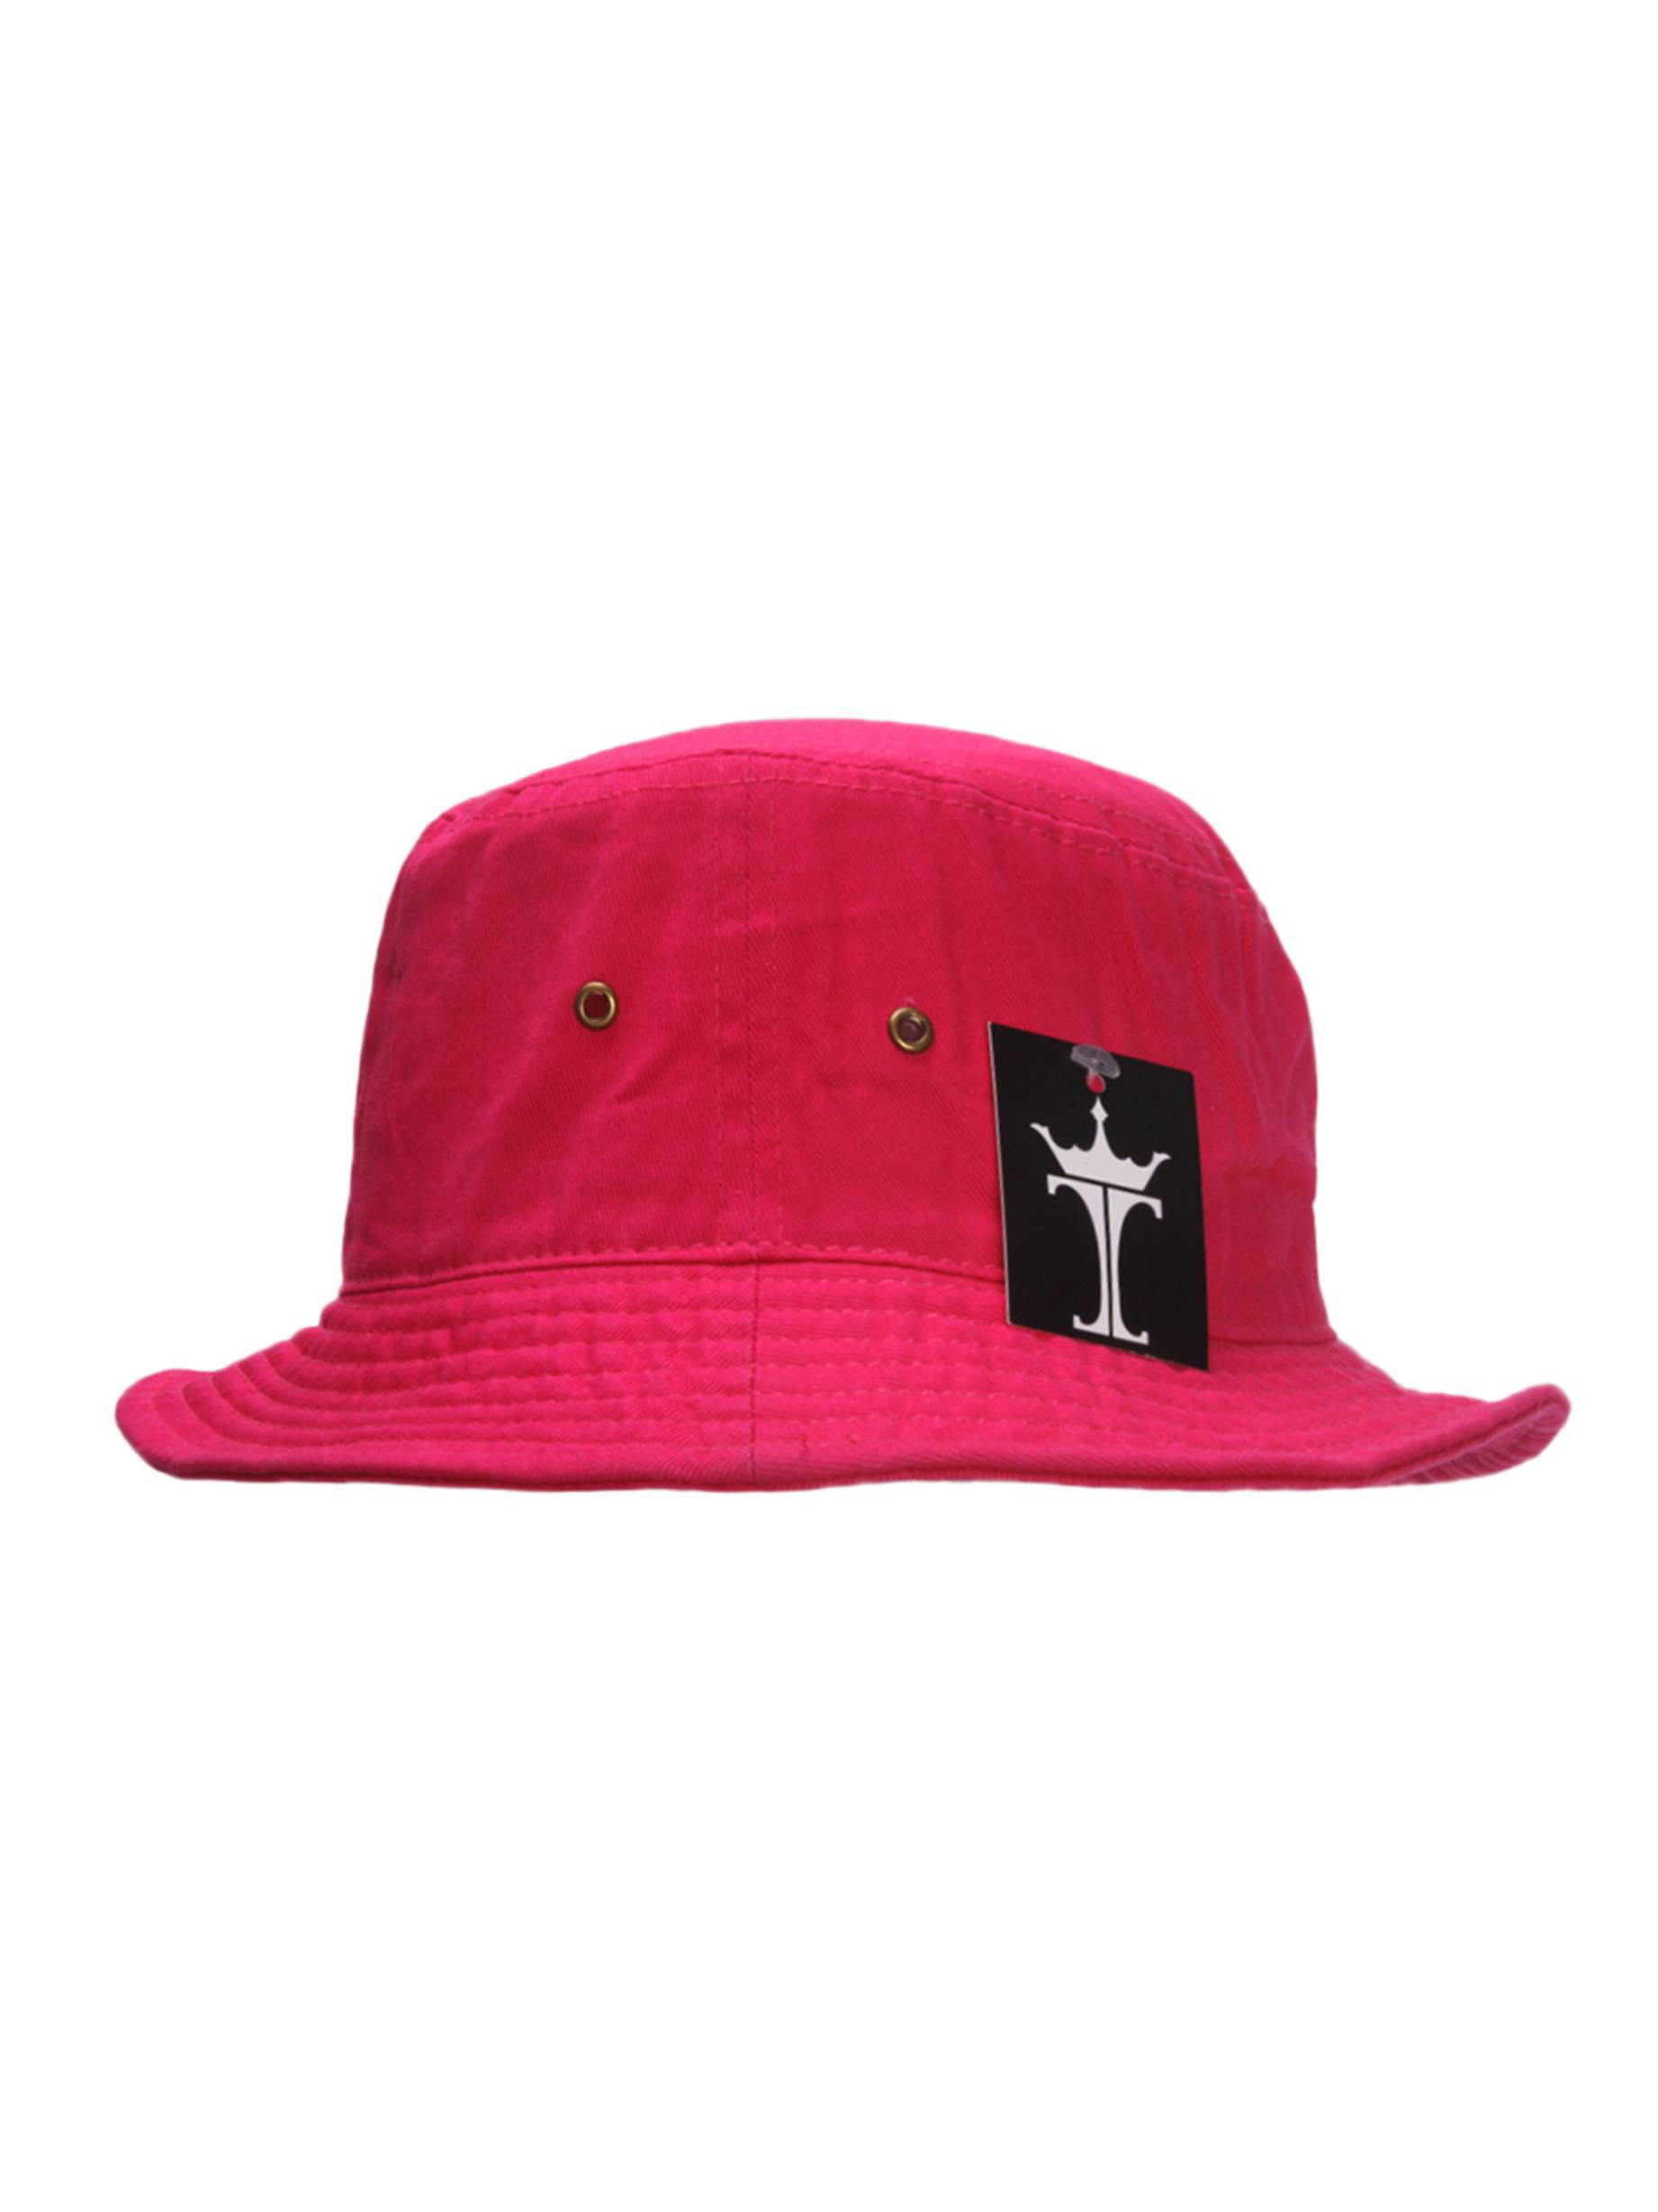 TopHeadwear Blank Bucket Fishing Hat - Hot Pink - Small/Medium